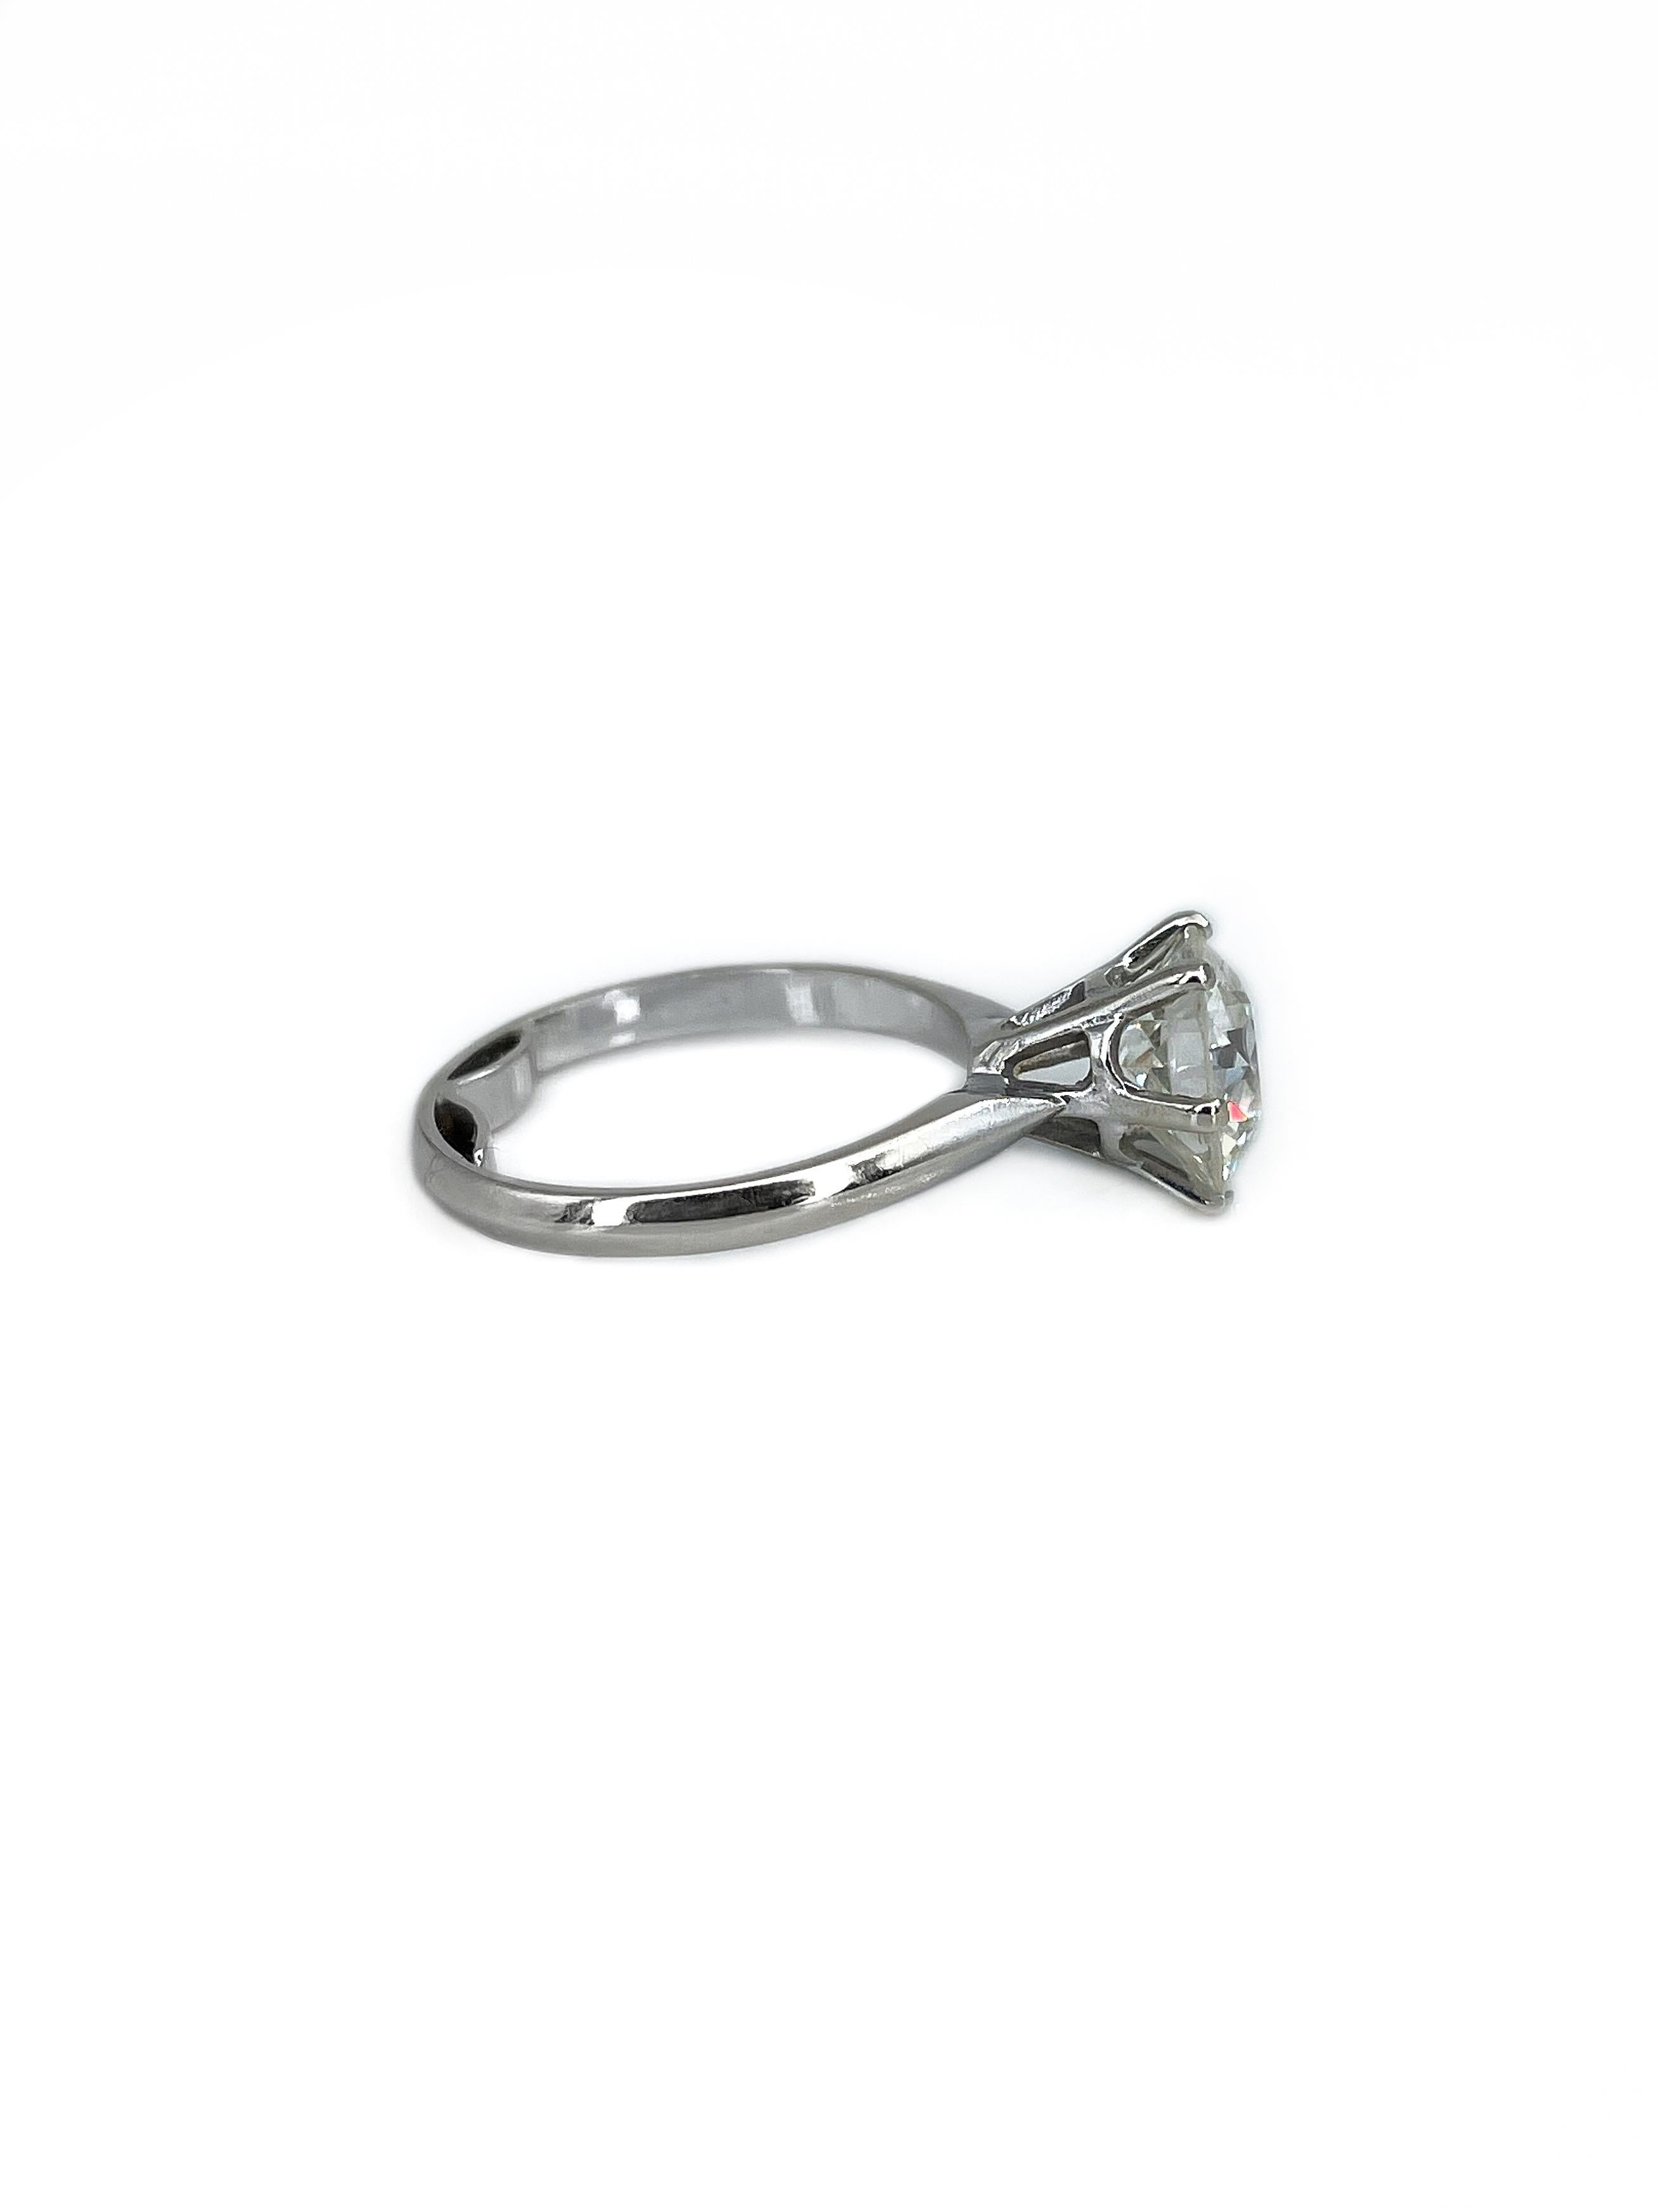 Modern Certified 18 Karat Gold 2.43 Carat Old European Cut VS2 Diamond Solitaire Ring For Sale